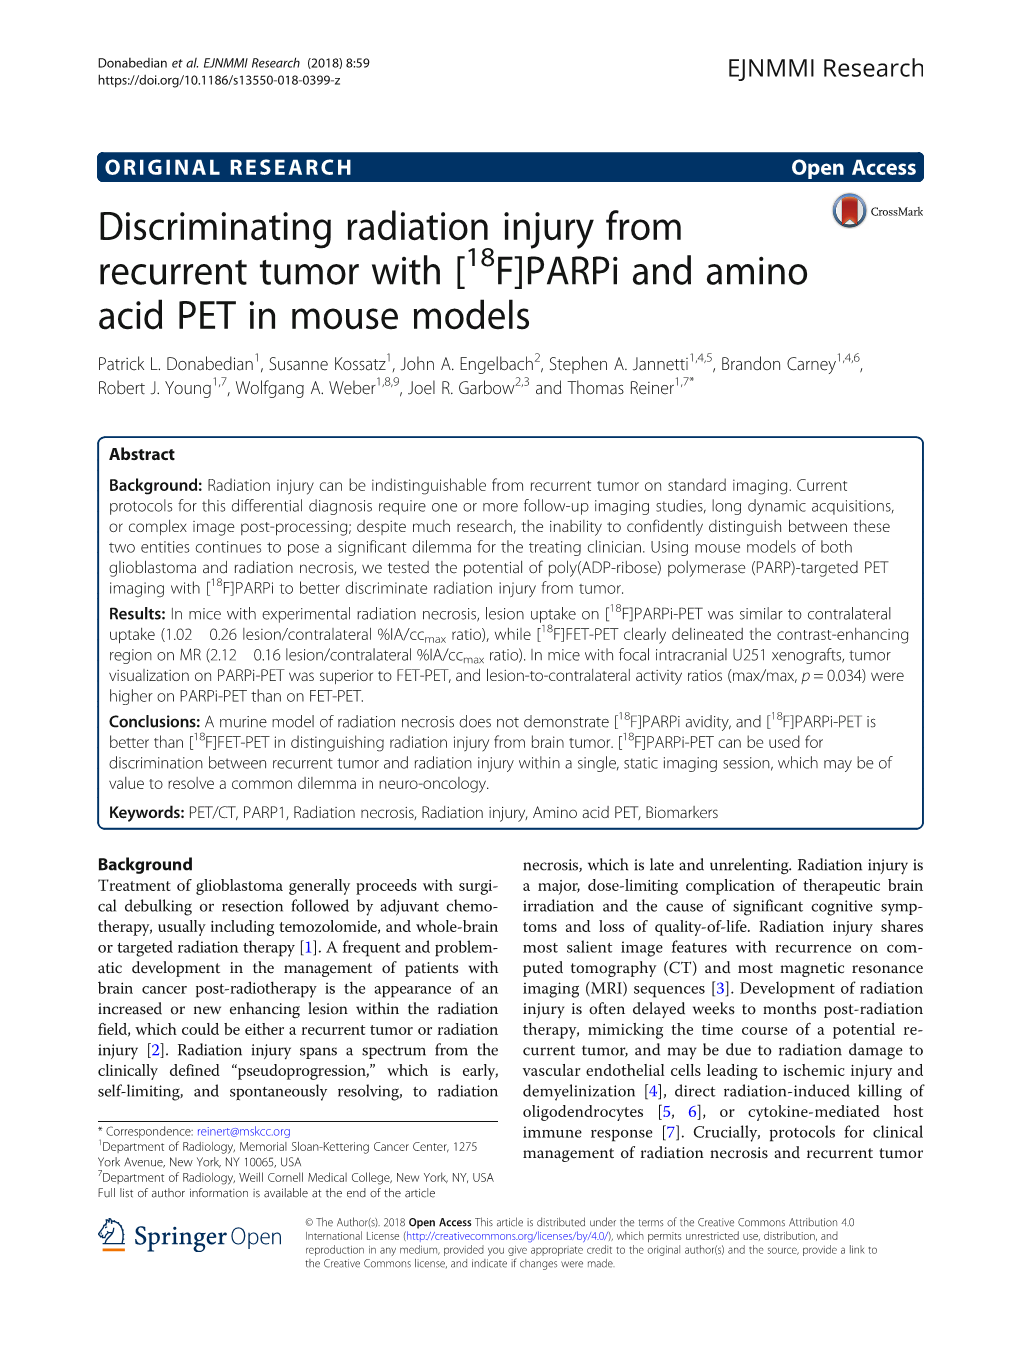 [18F]Parpi and Amino Acid PET in Mouse Models Patrick L